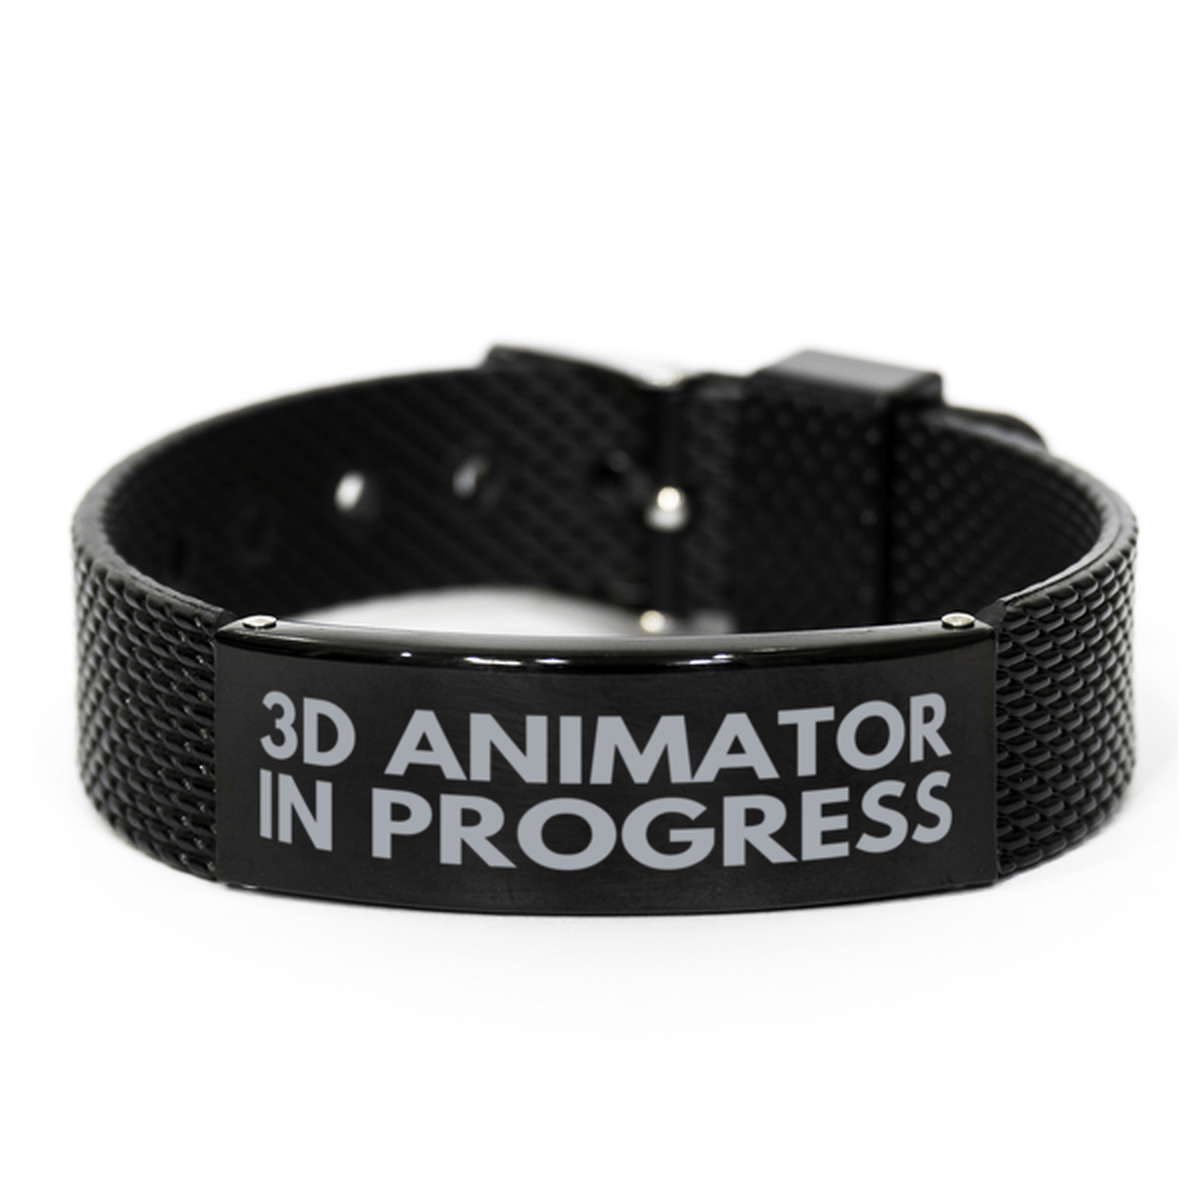 Inspirational 3D Animator Black Shark Mesh Bracelet, 3D Animator In Progress, Best Graduation Gifts for Students